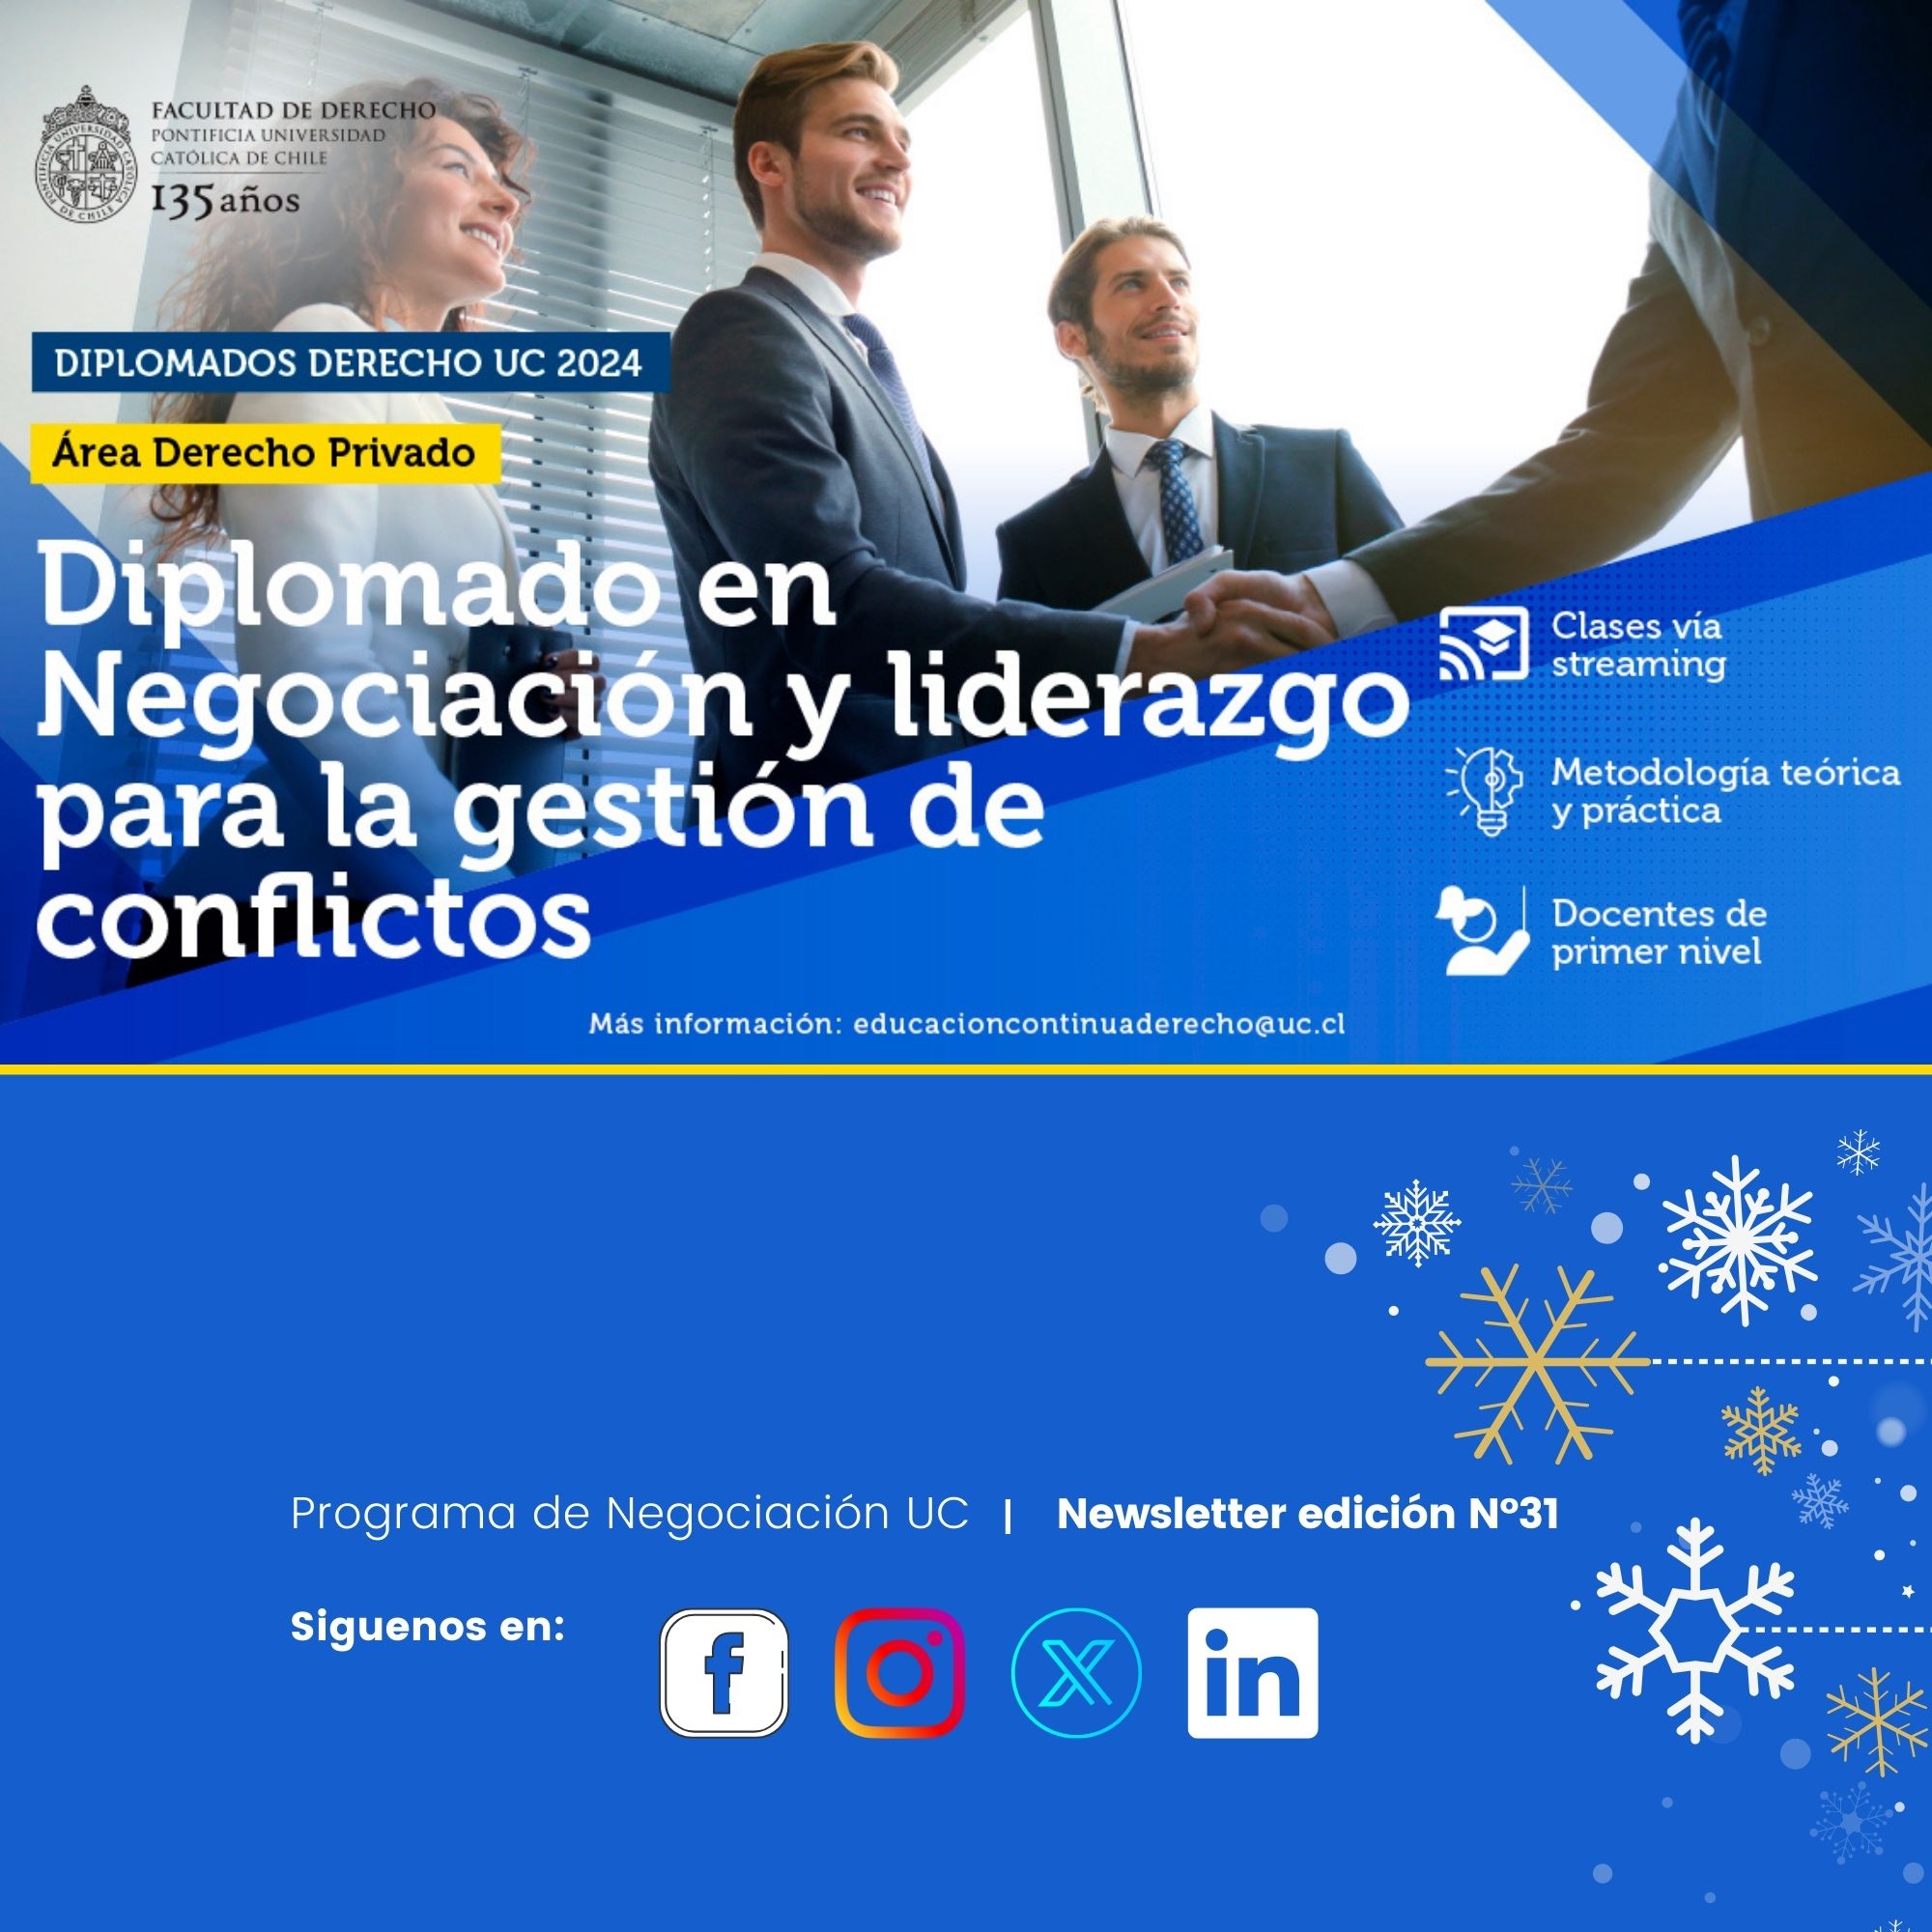 Copia de Newsletter Nº31 Programa de Negociación UC.jpg